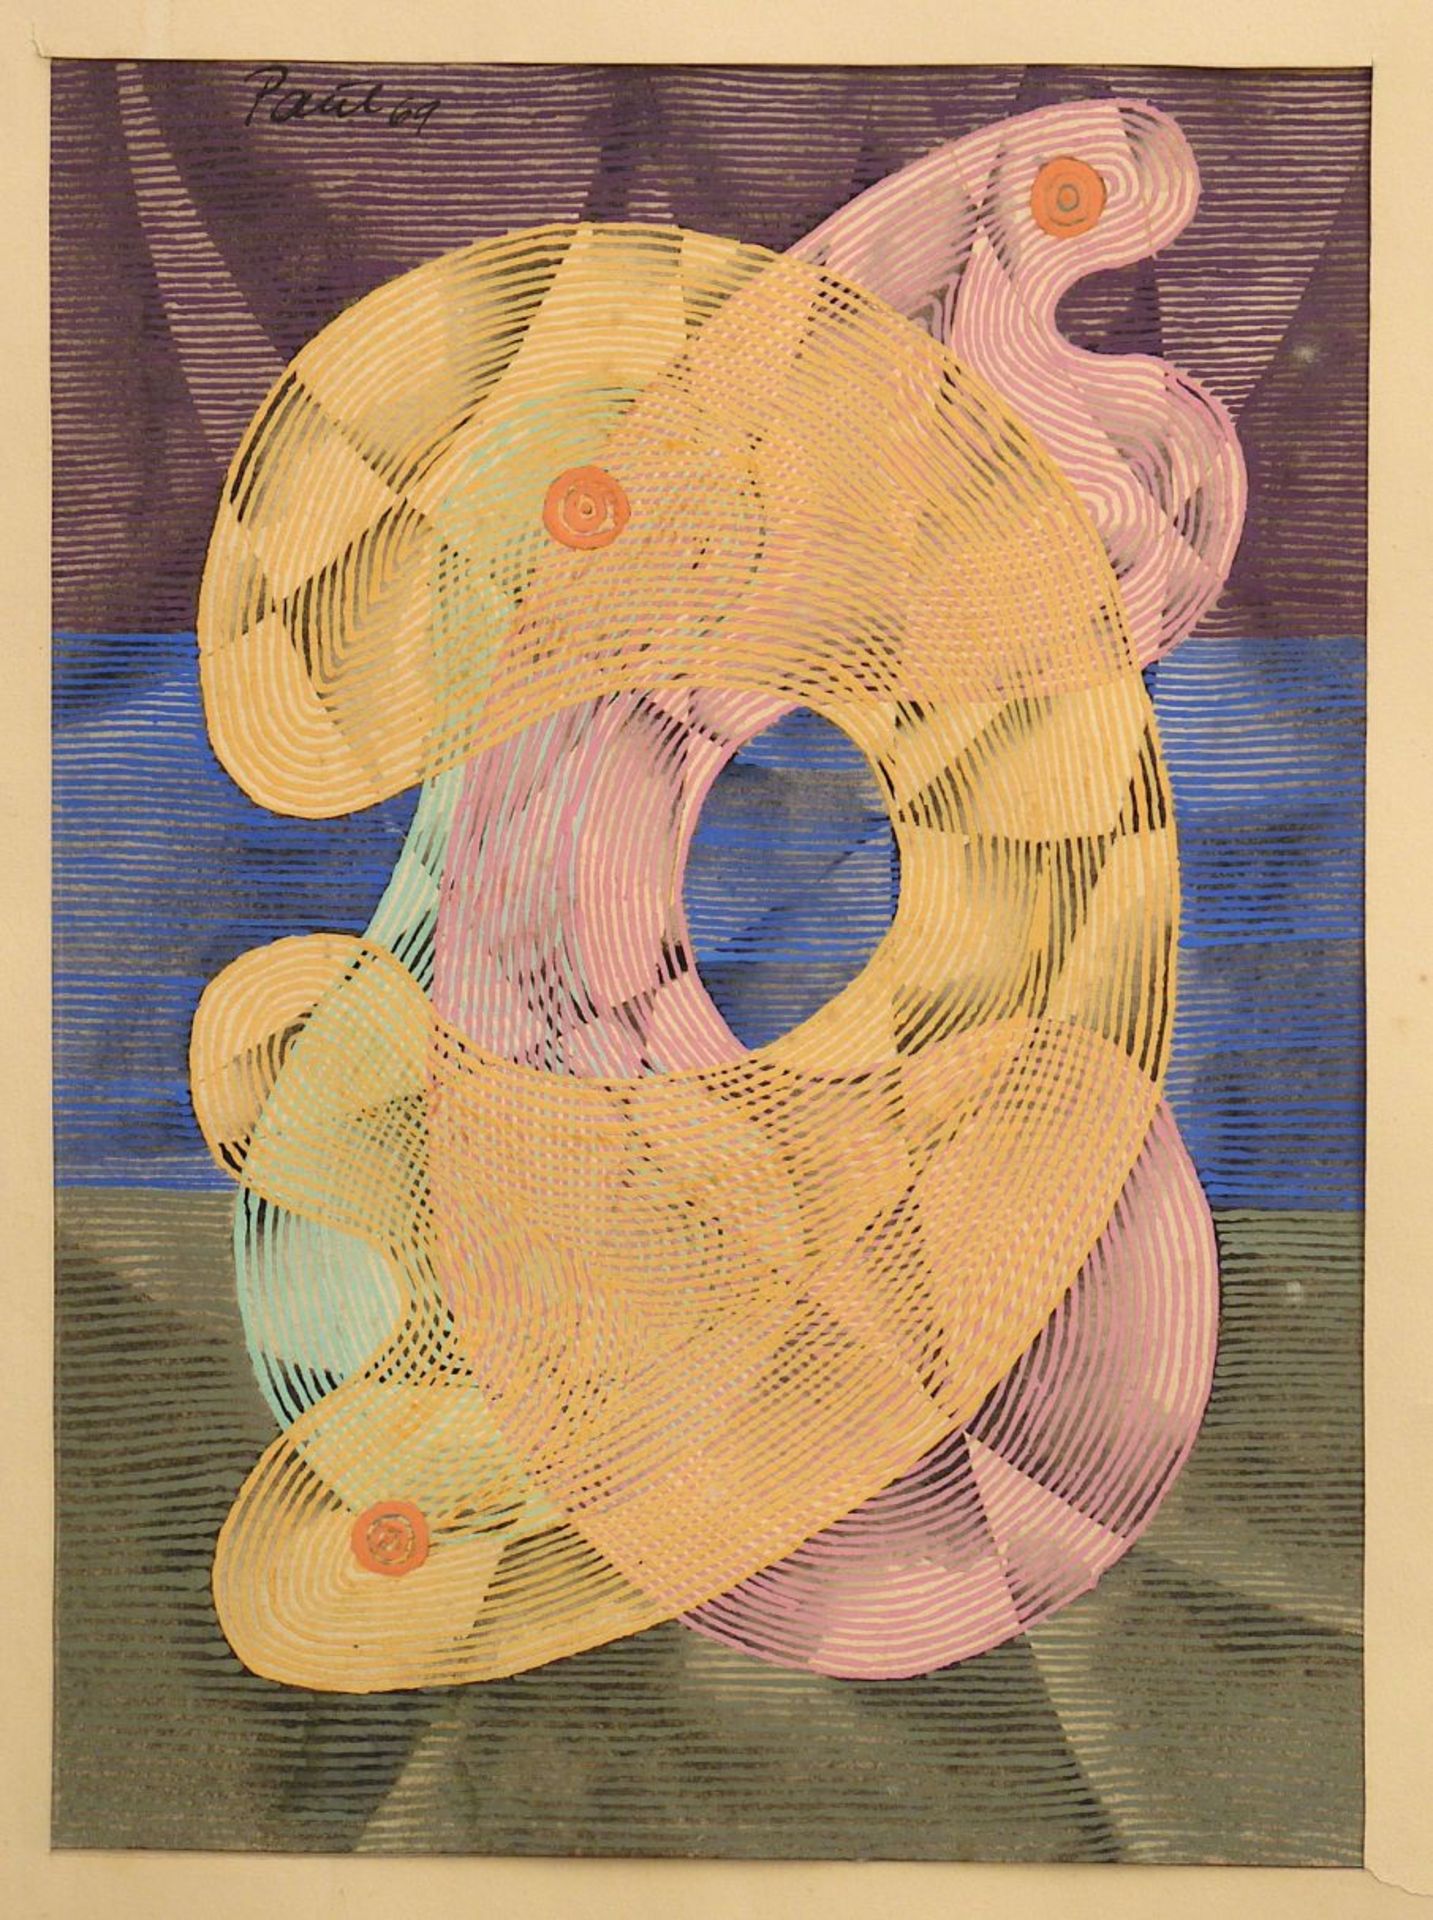 PAUL, GEORG: "Komposition", 1969